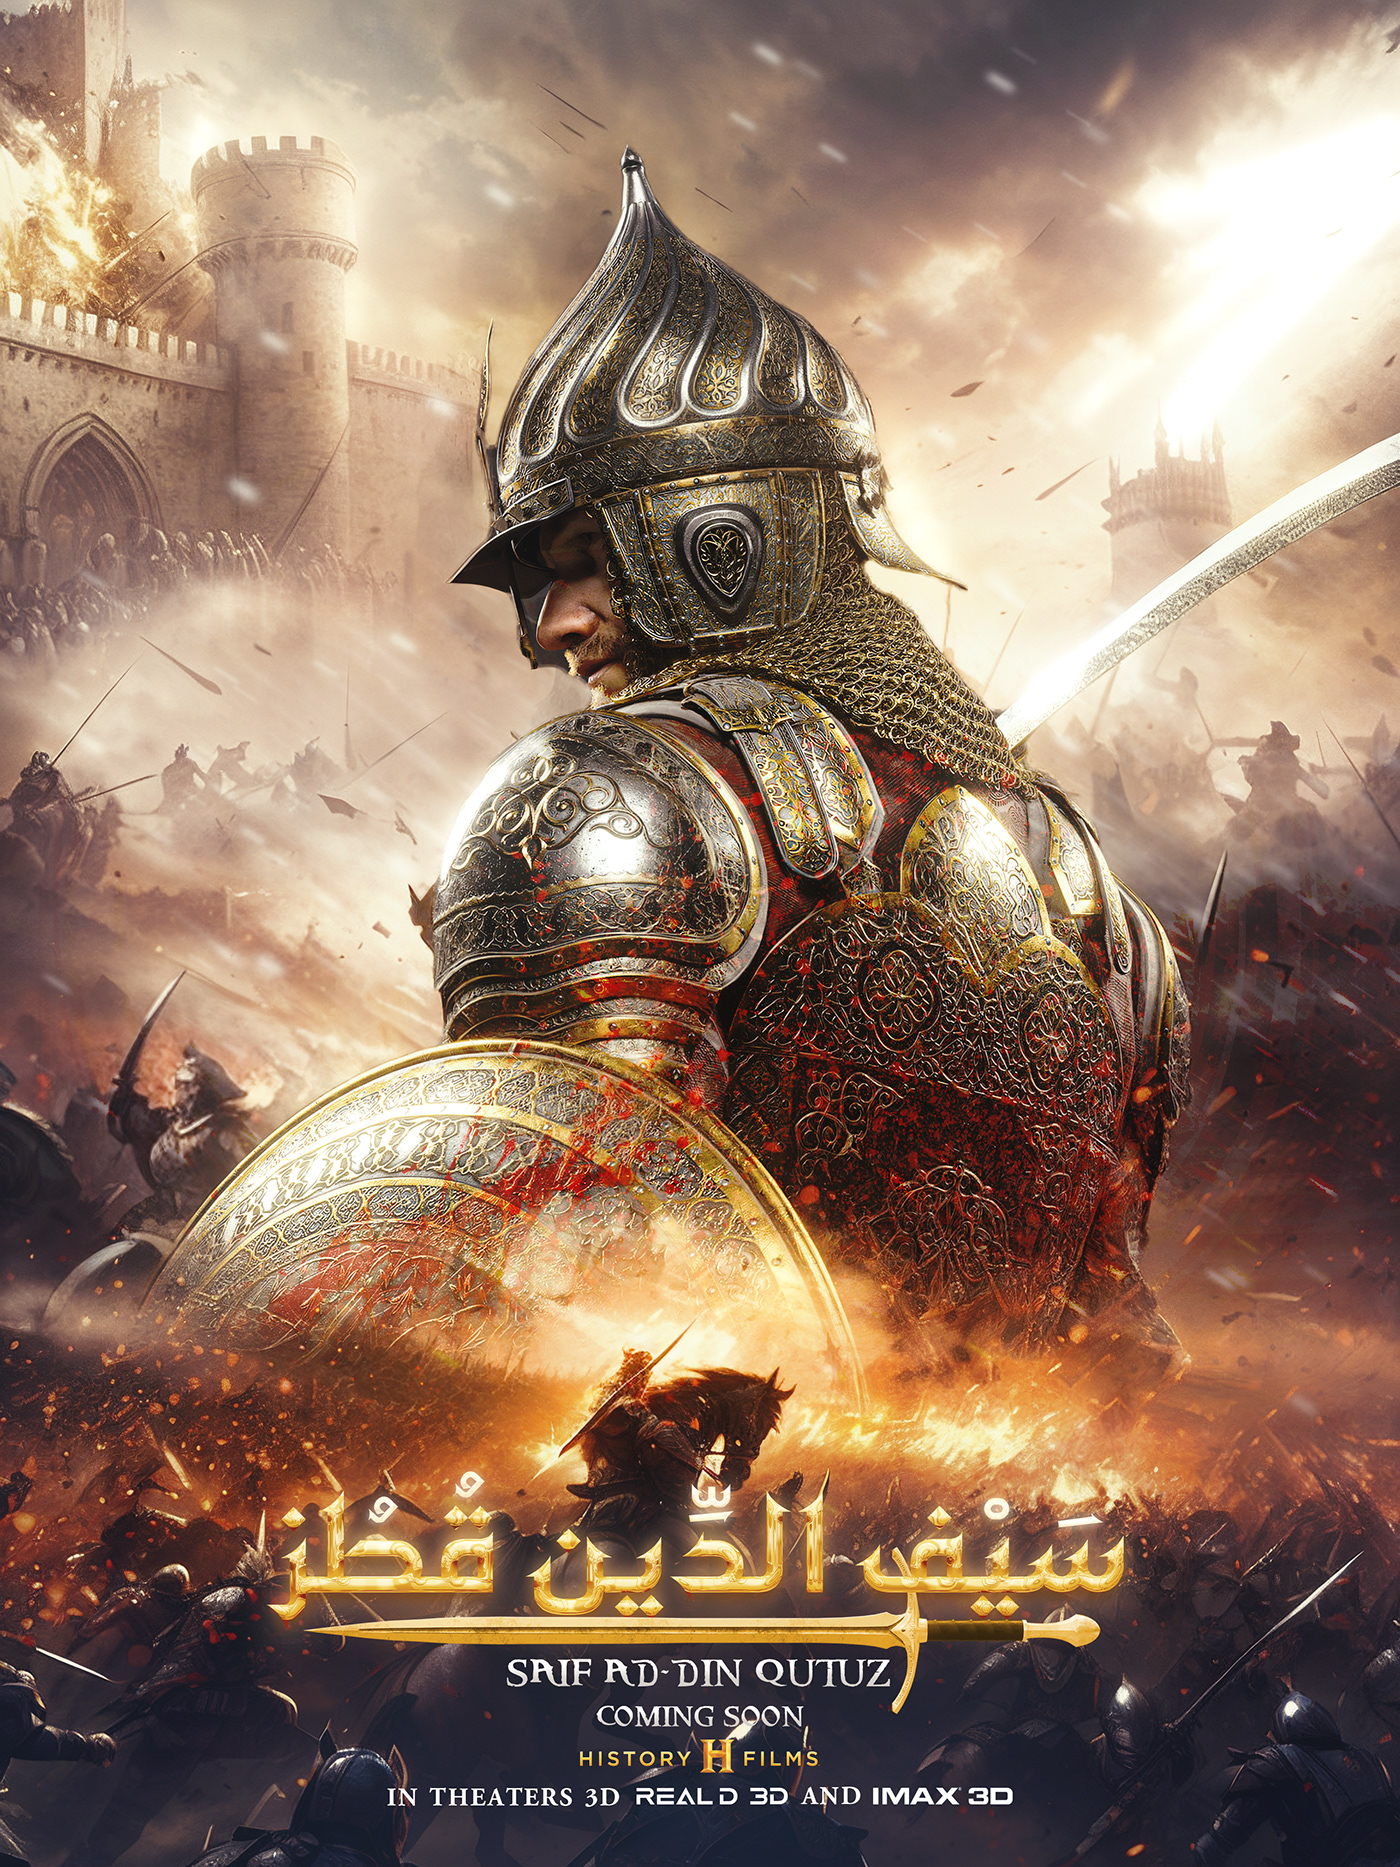 marvel Digital Art  SuperHero movie poster disney pixar islamic Sultan knight salah el din